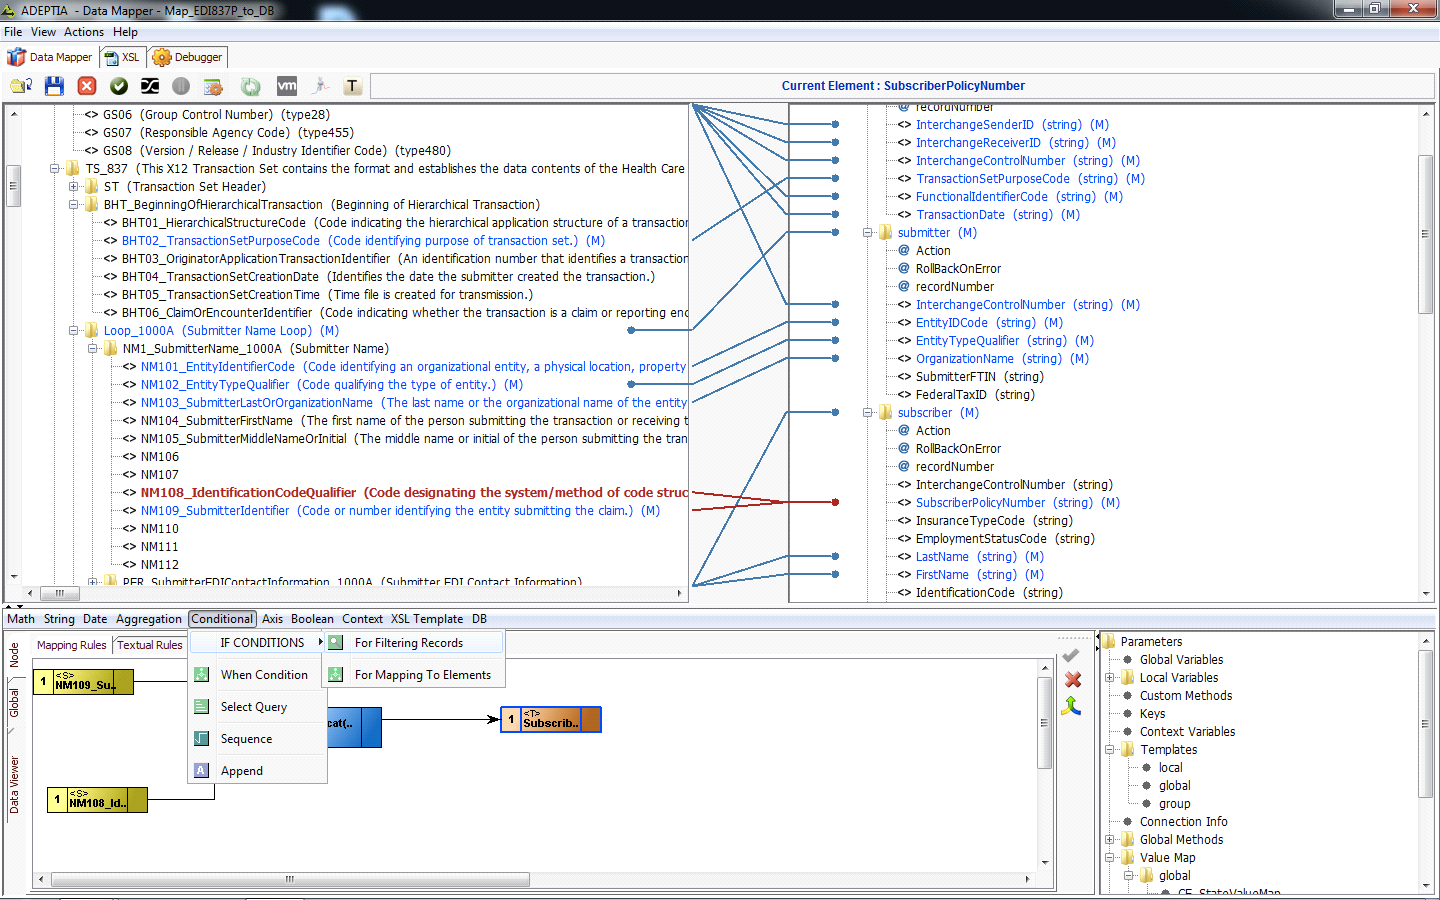 Screen shot of Adeptia Integration software.